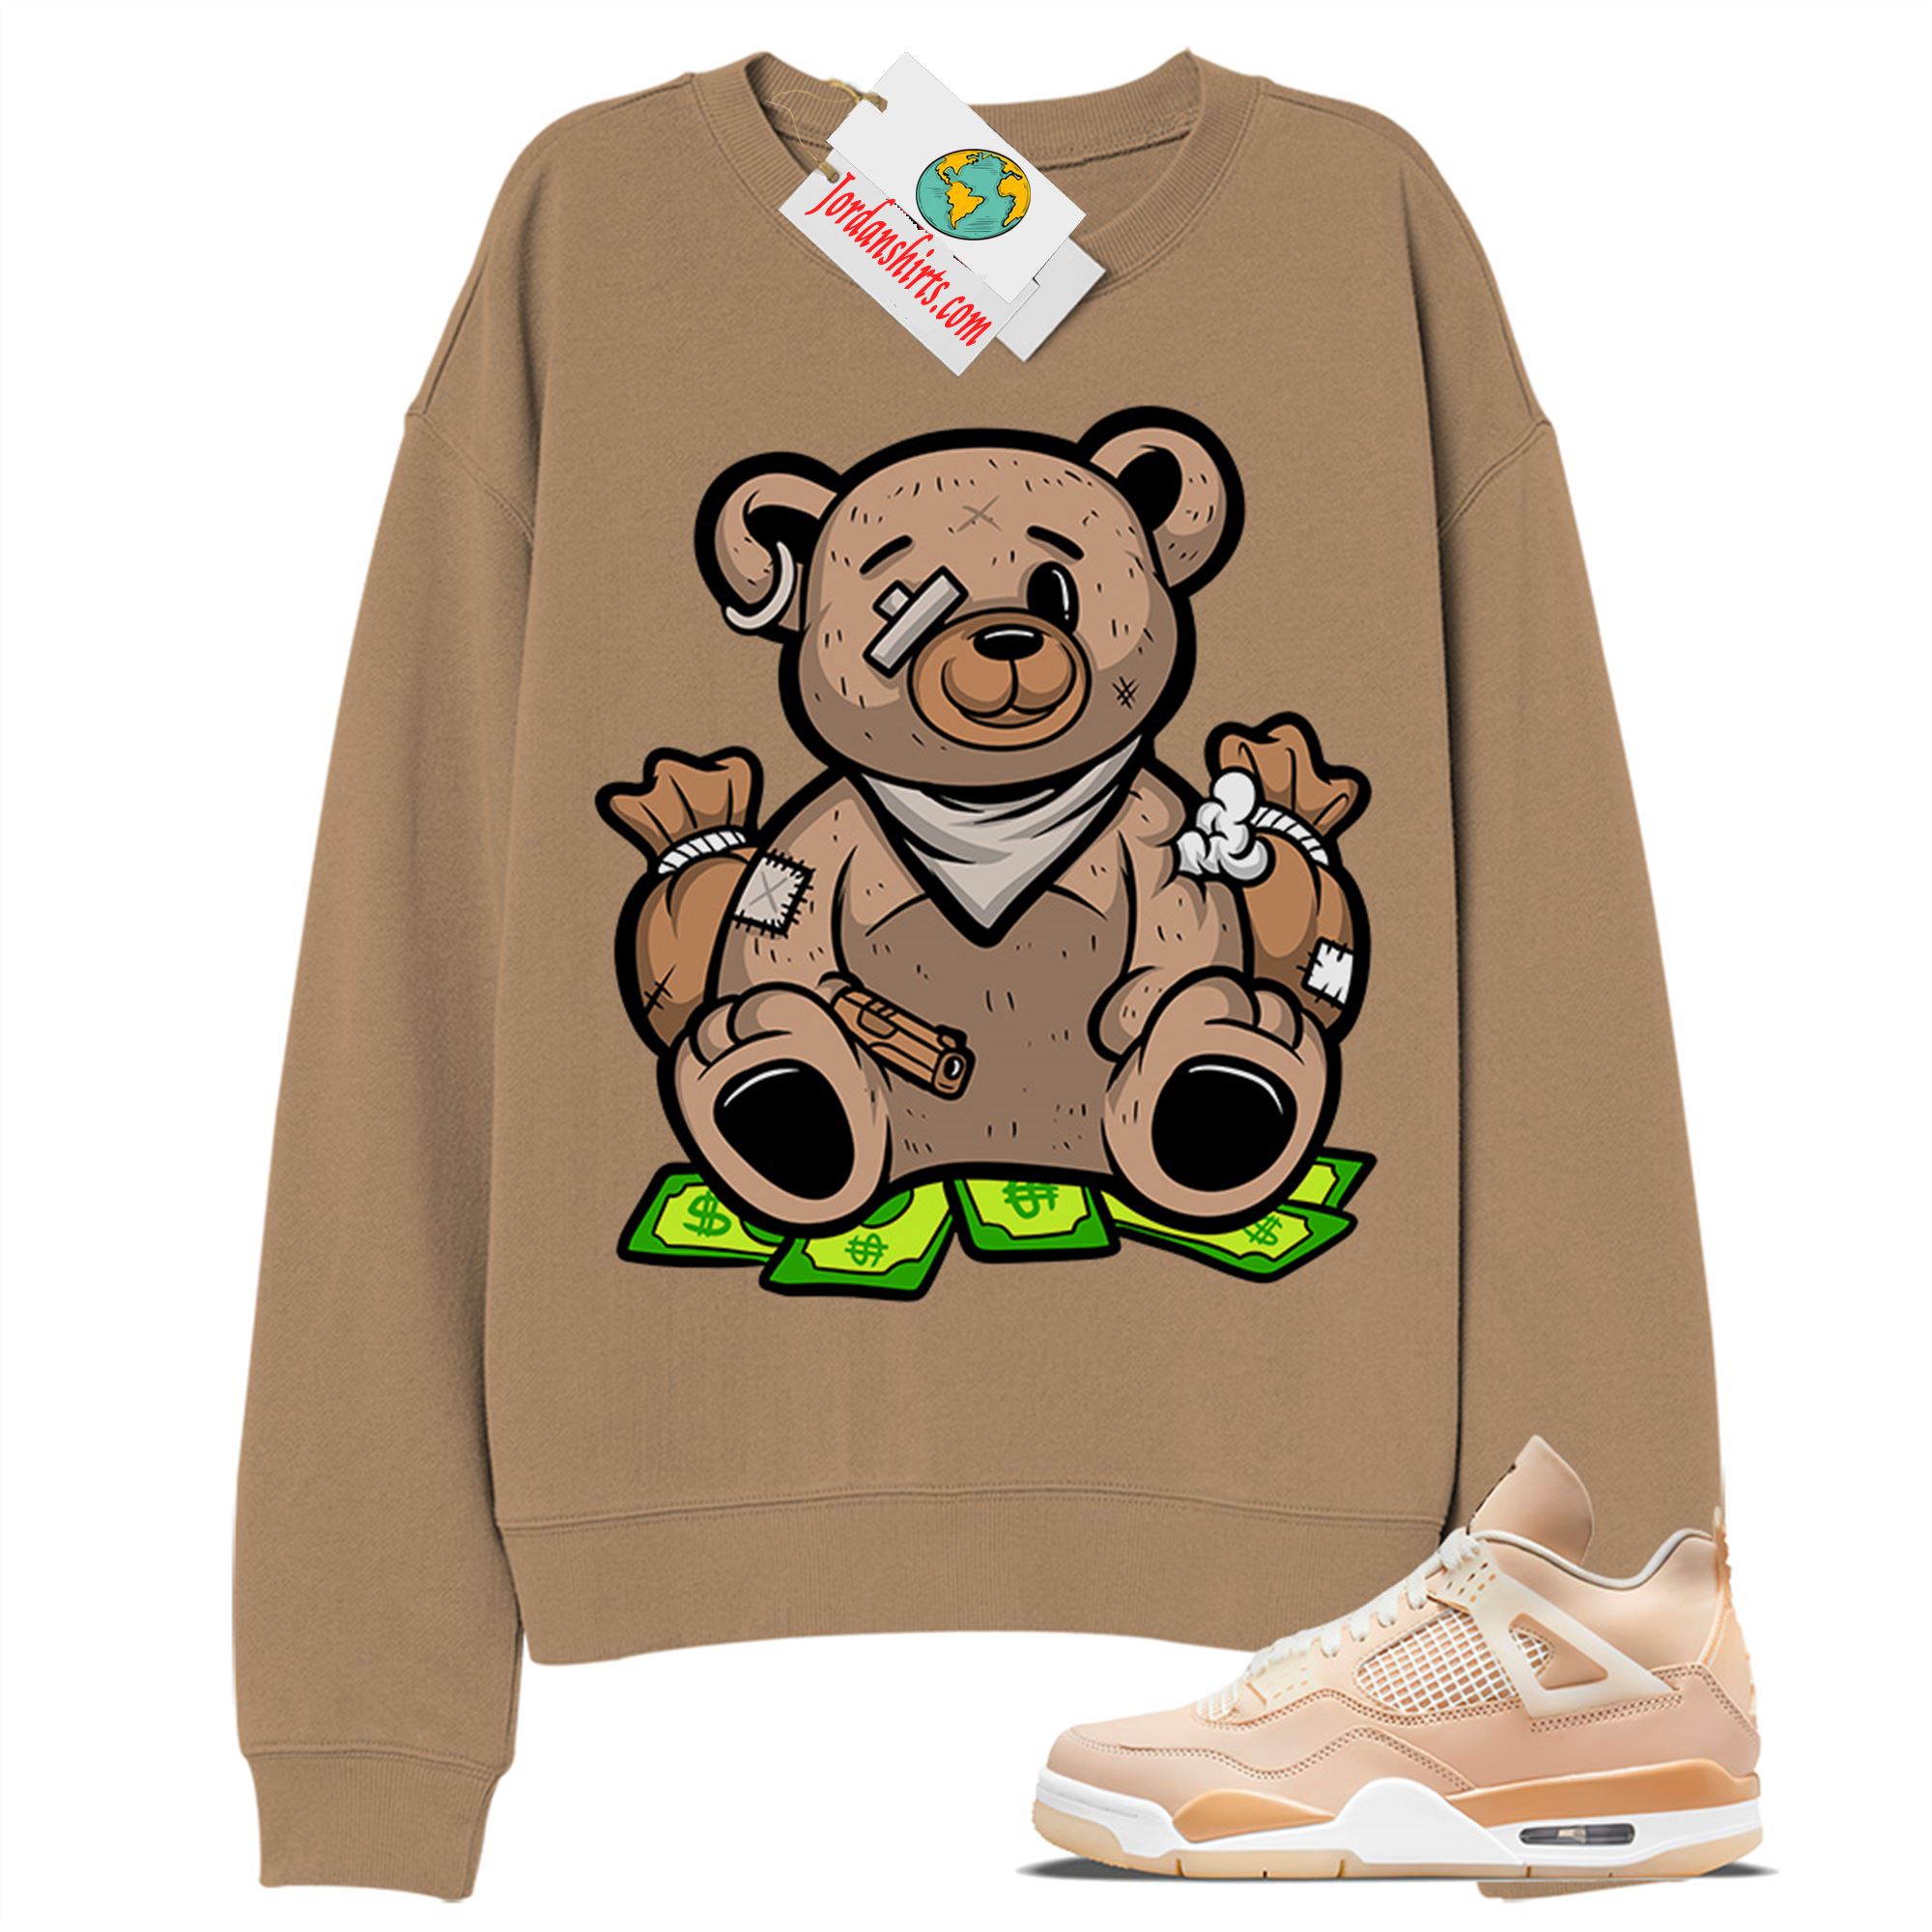 Jordan 4 Sweatshirt, Rich Teddy Bear Gangster Sandstone Sweatshirt Air Jordan 4 Shimmer 4s Size Up To 5xl